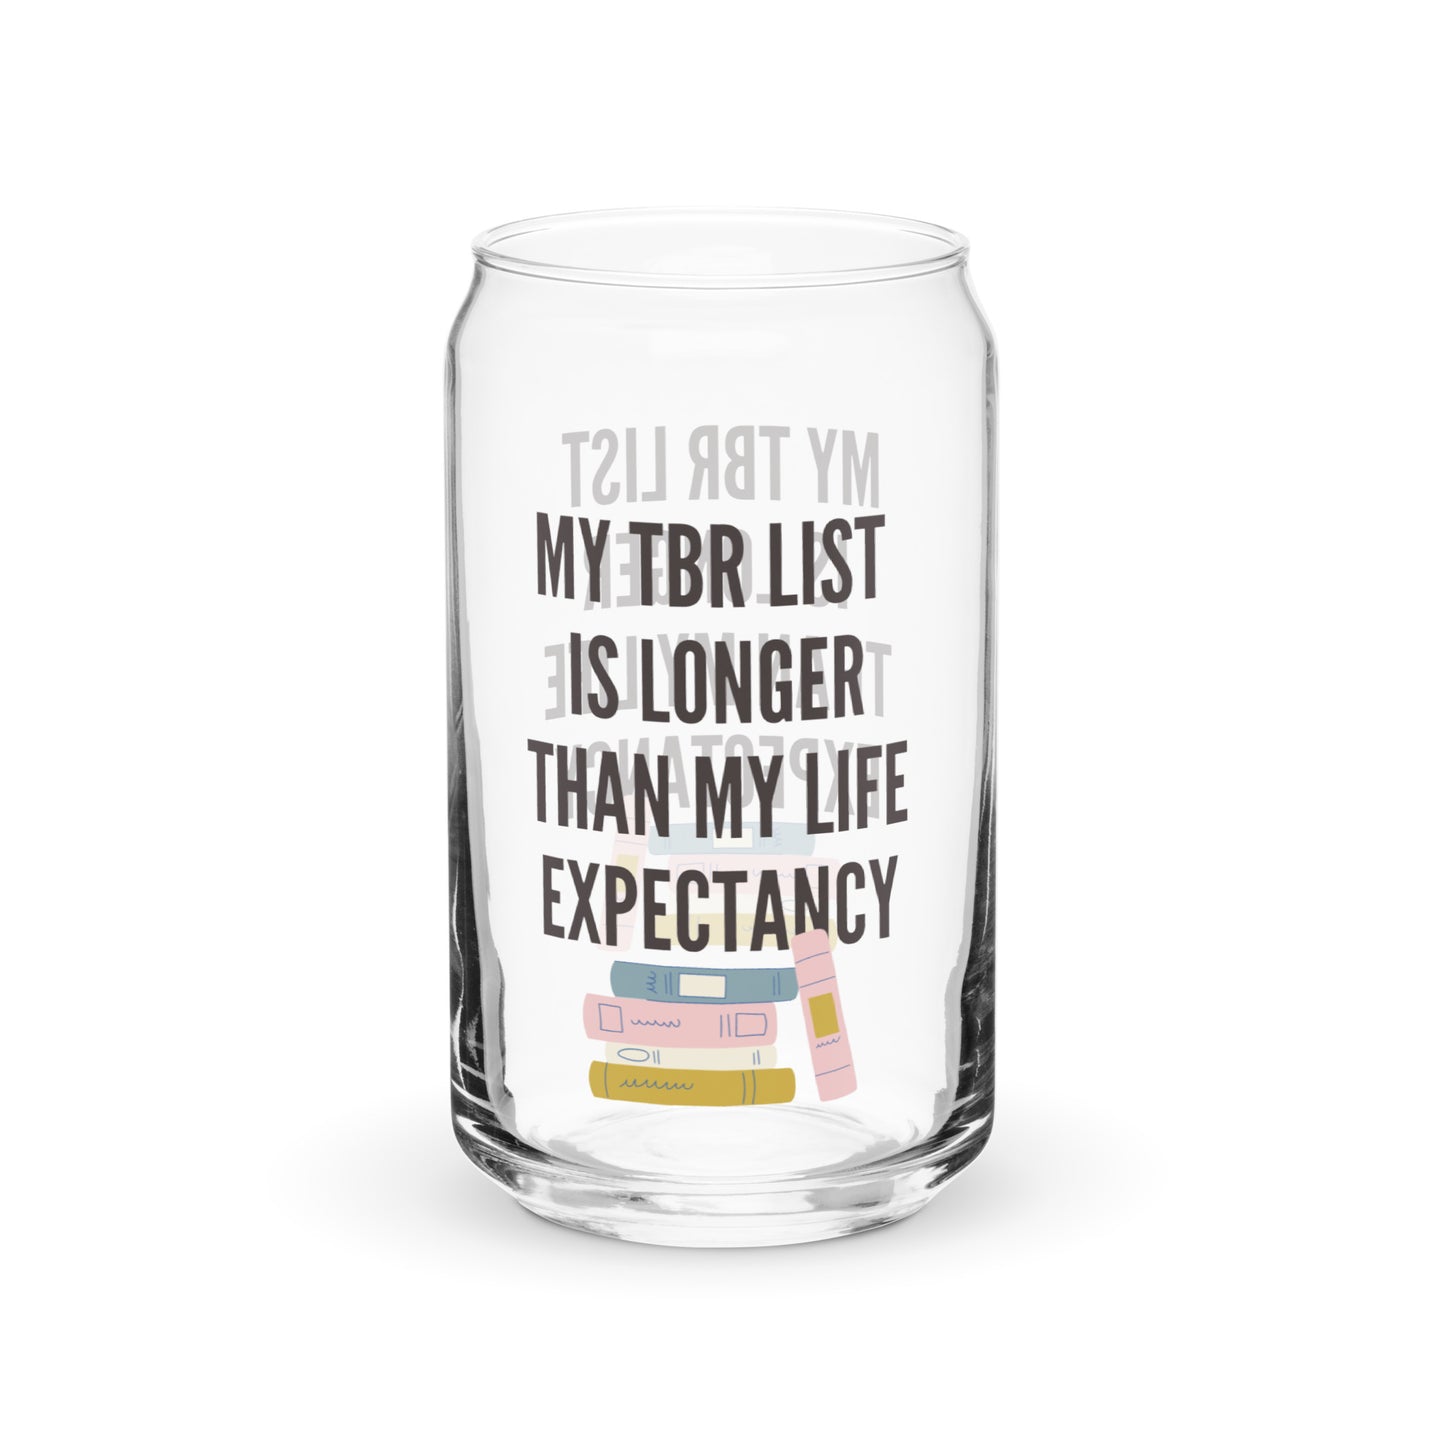 My TBR List is Longer than My Life Expectancy Glass